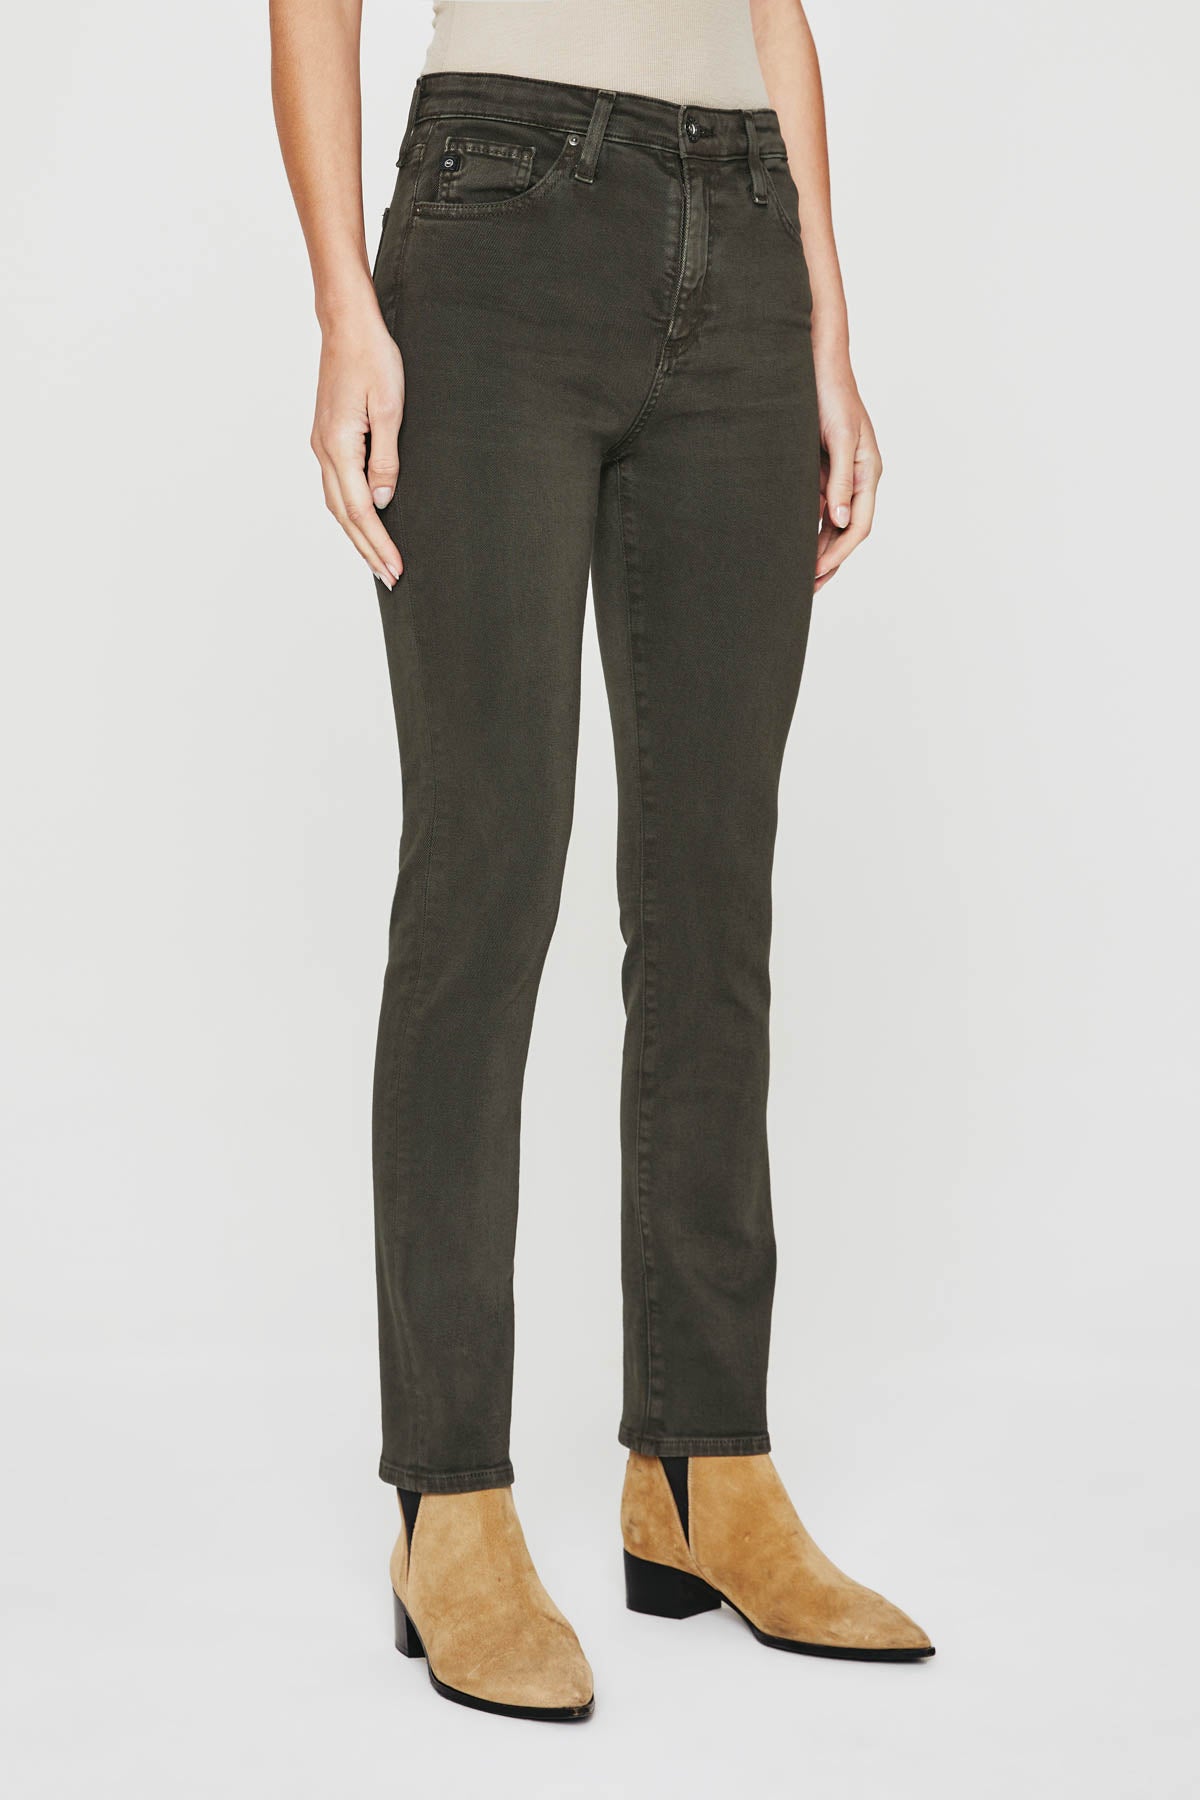 Mari High Rise Slim Straight Pant - AG Jeans - Danali - HYD1875-SLSTOW-25